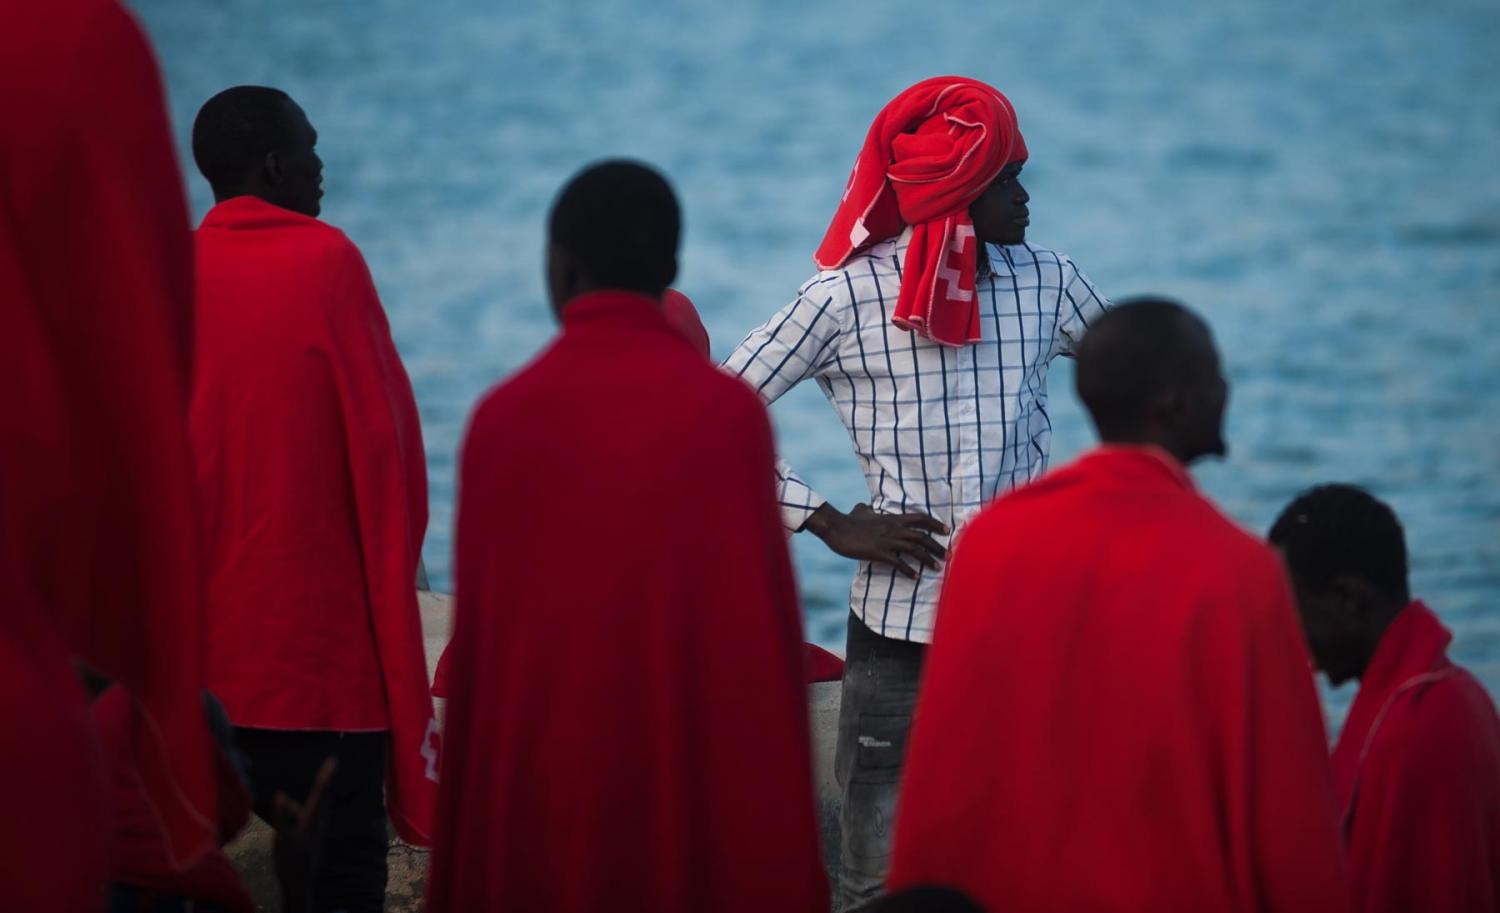 Migrants rescued from the Mediterranean (Photo: Jesus Merida via Getty)